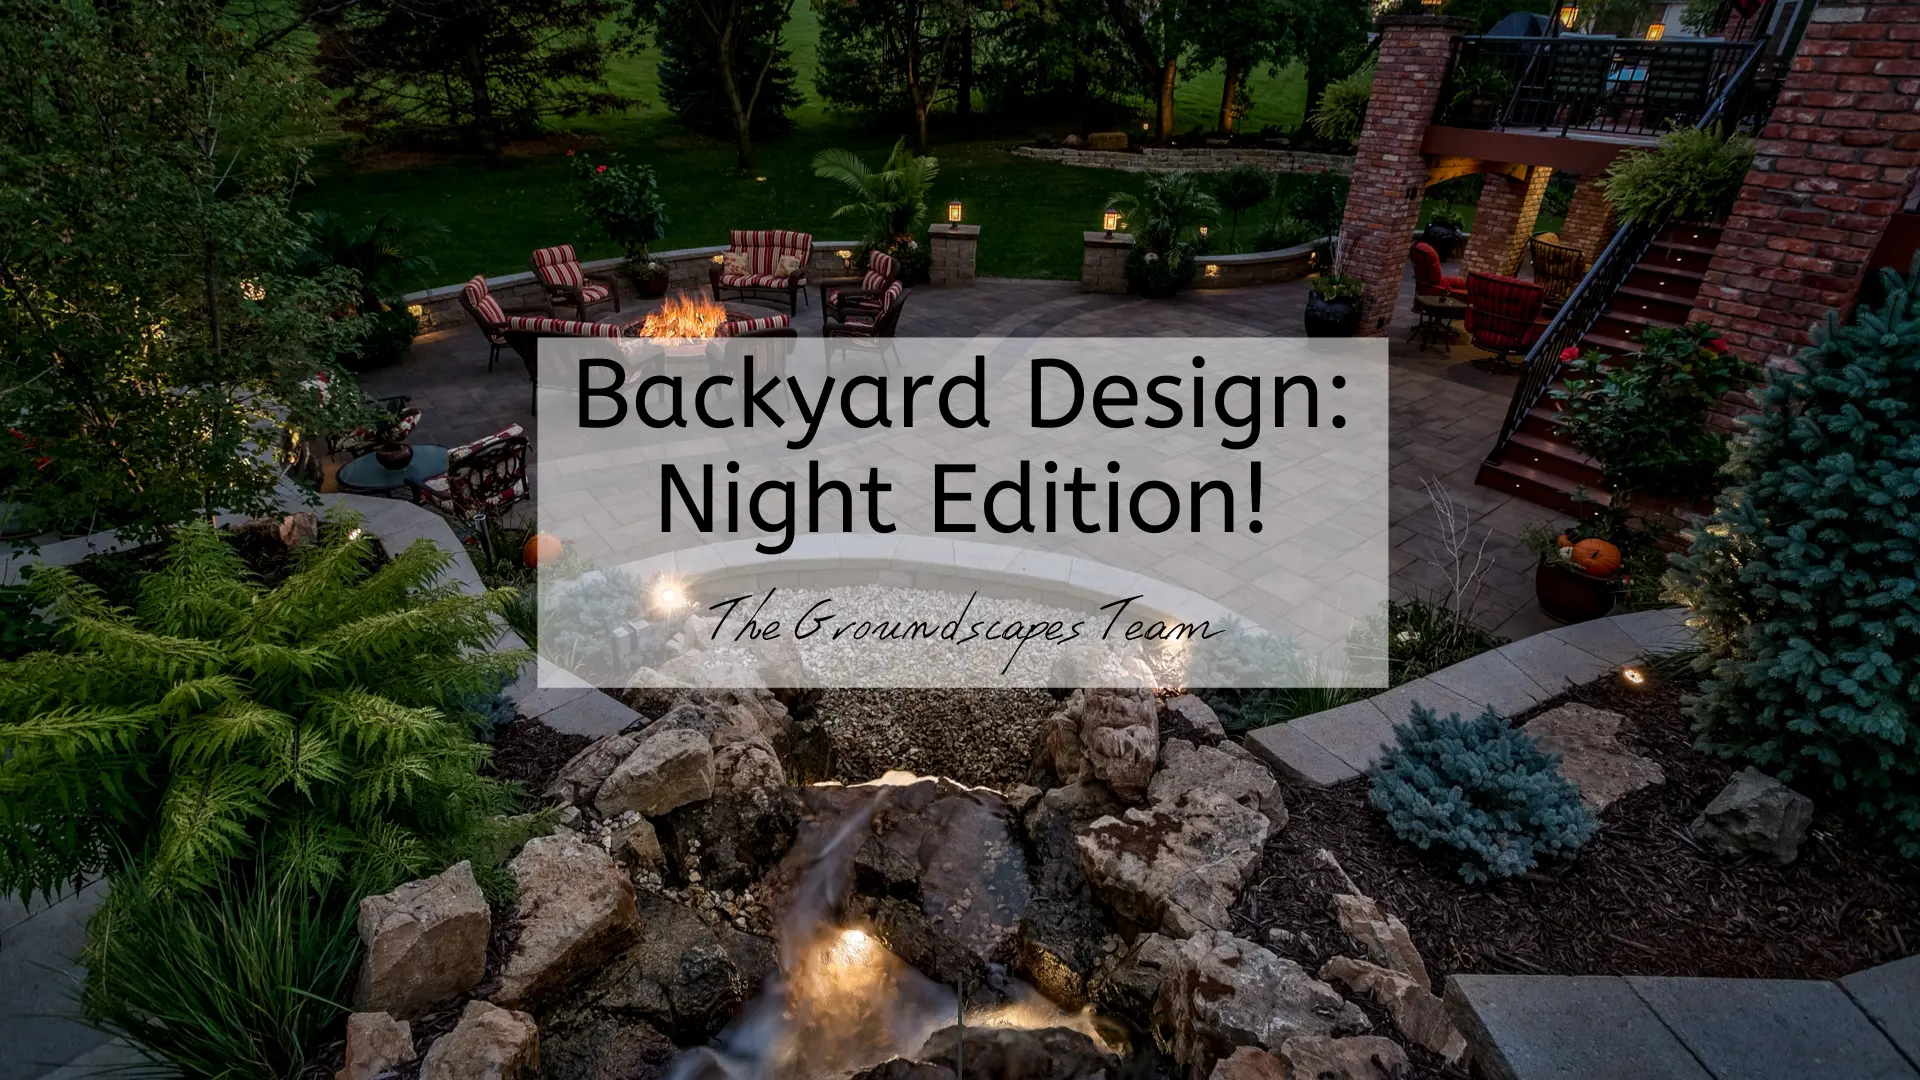 Backyard Design: Night Edition!